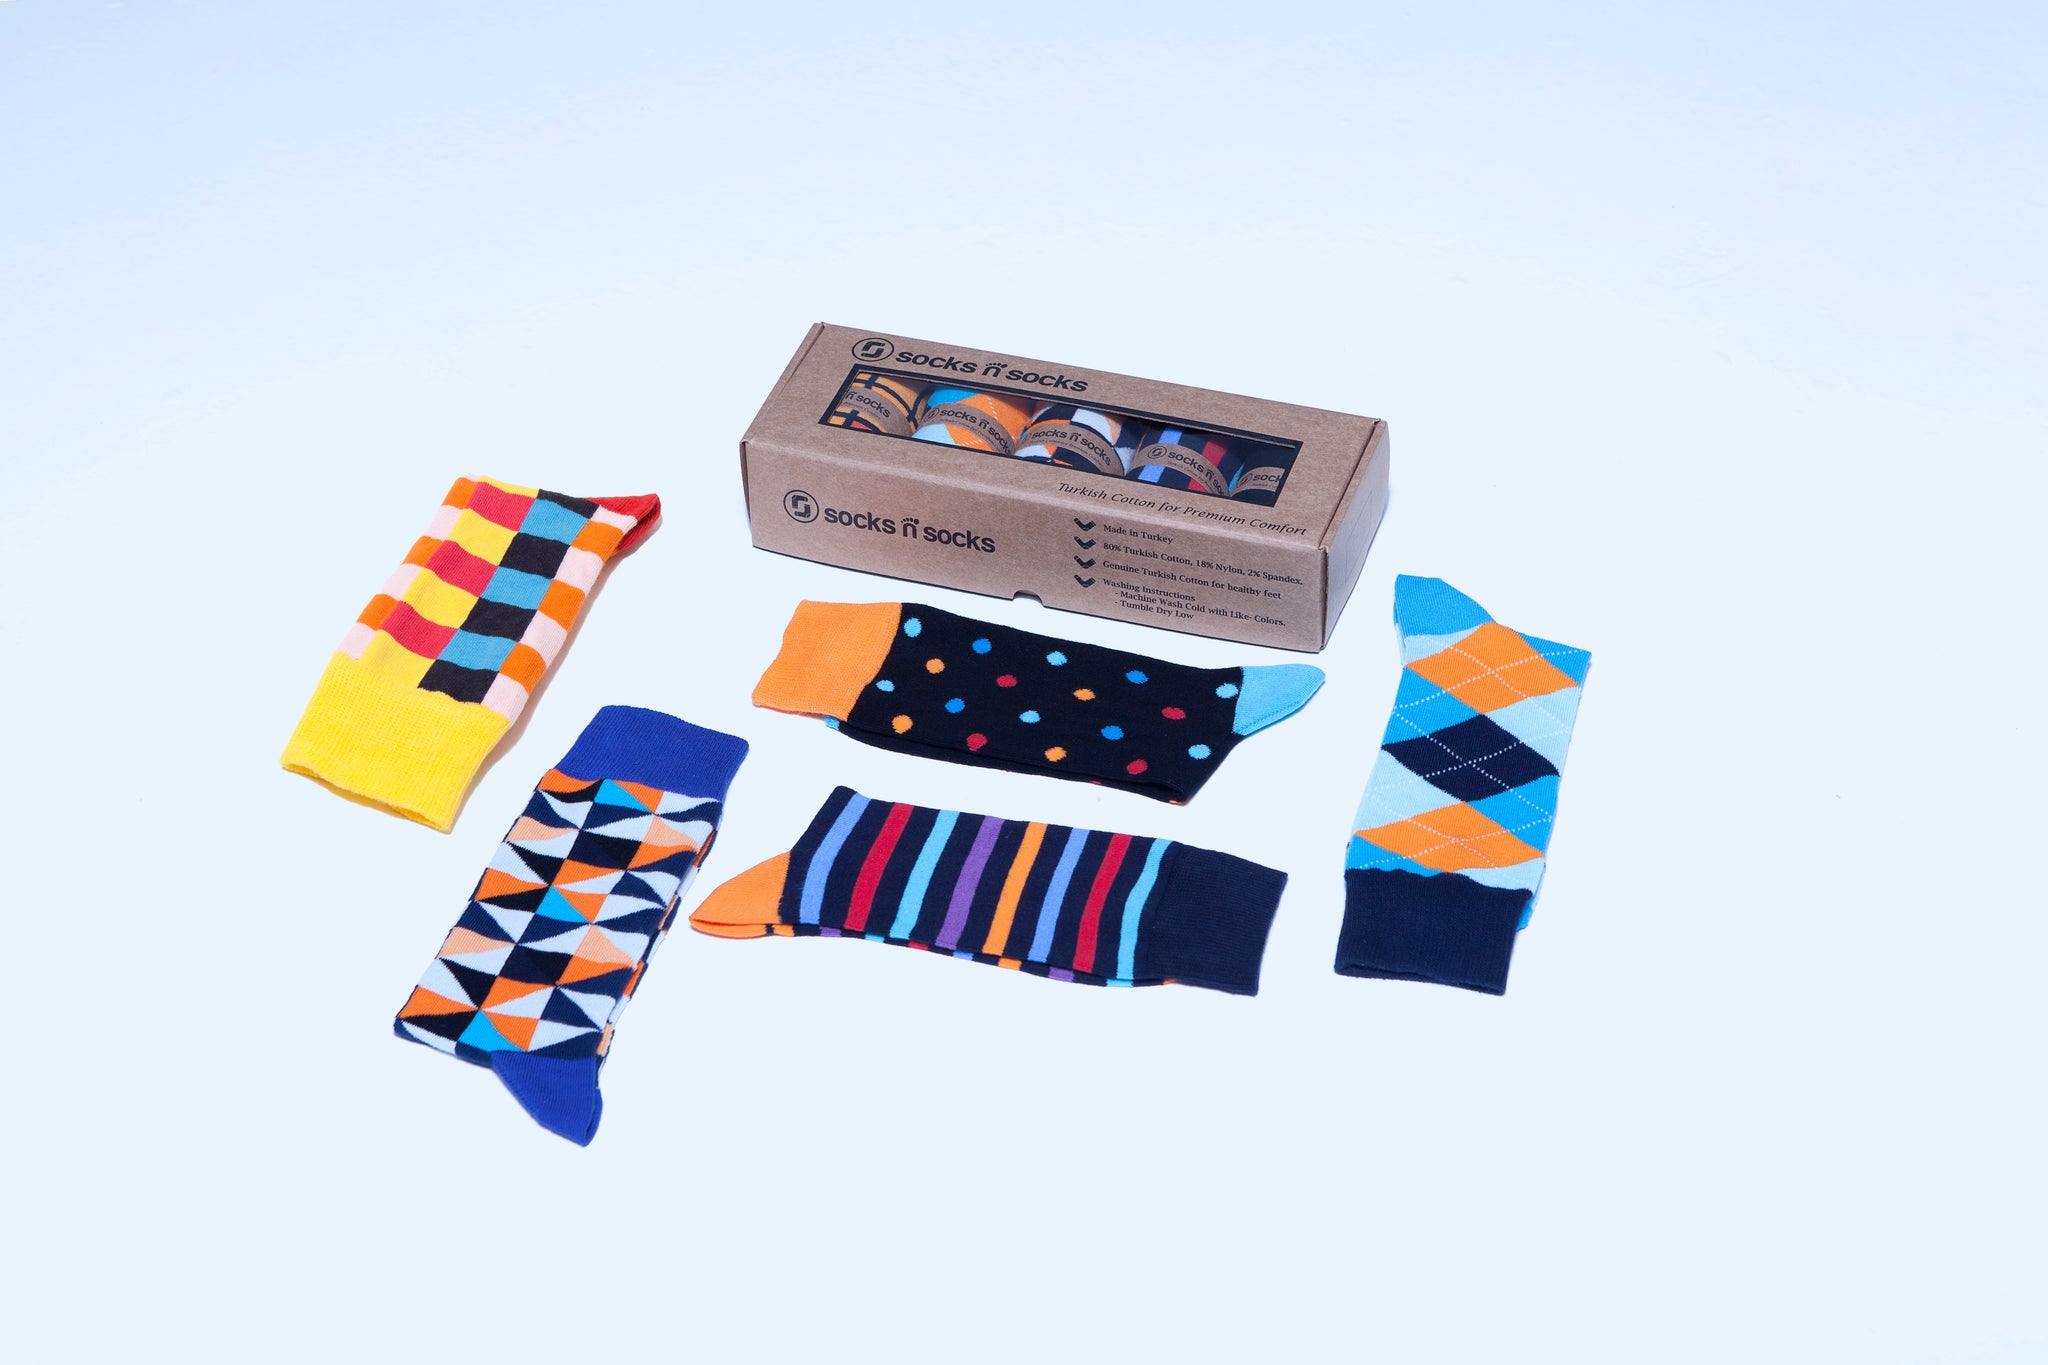 Men's Fashionable Mix Set Socks - Socks n Socks